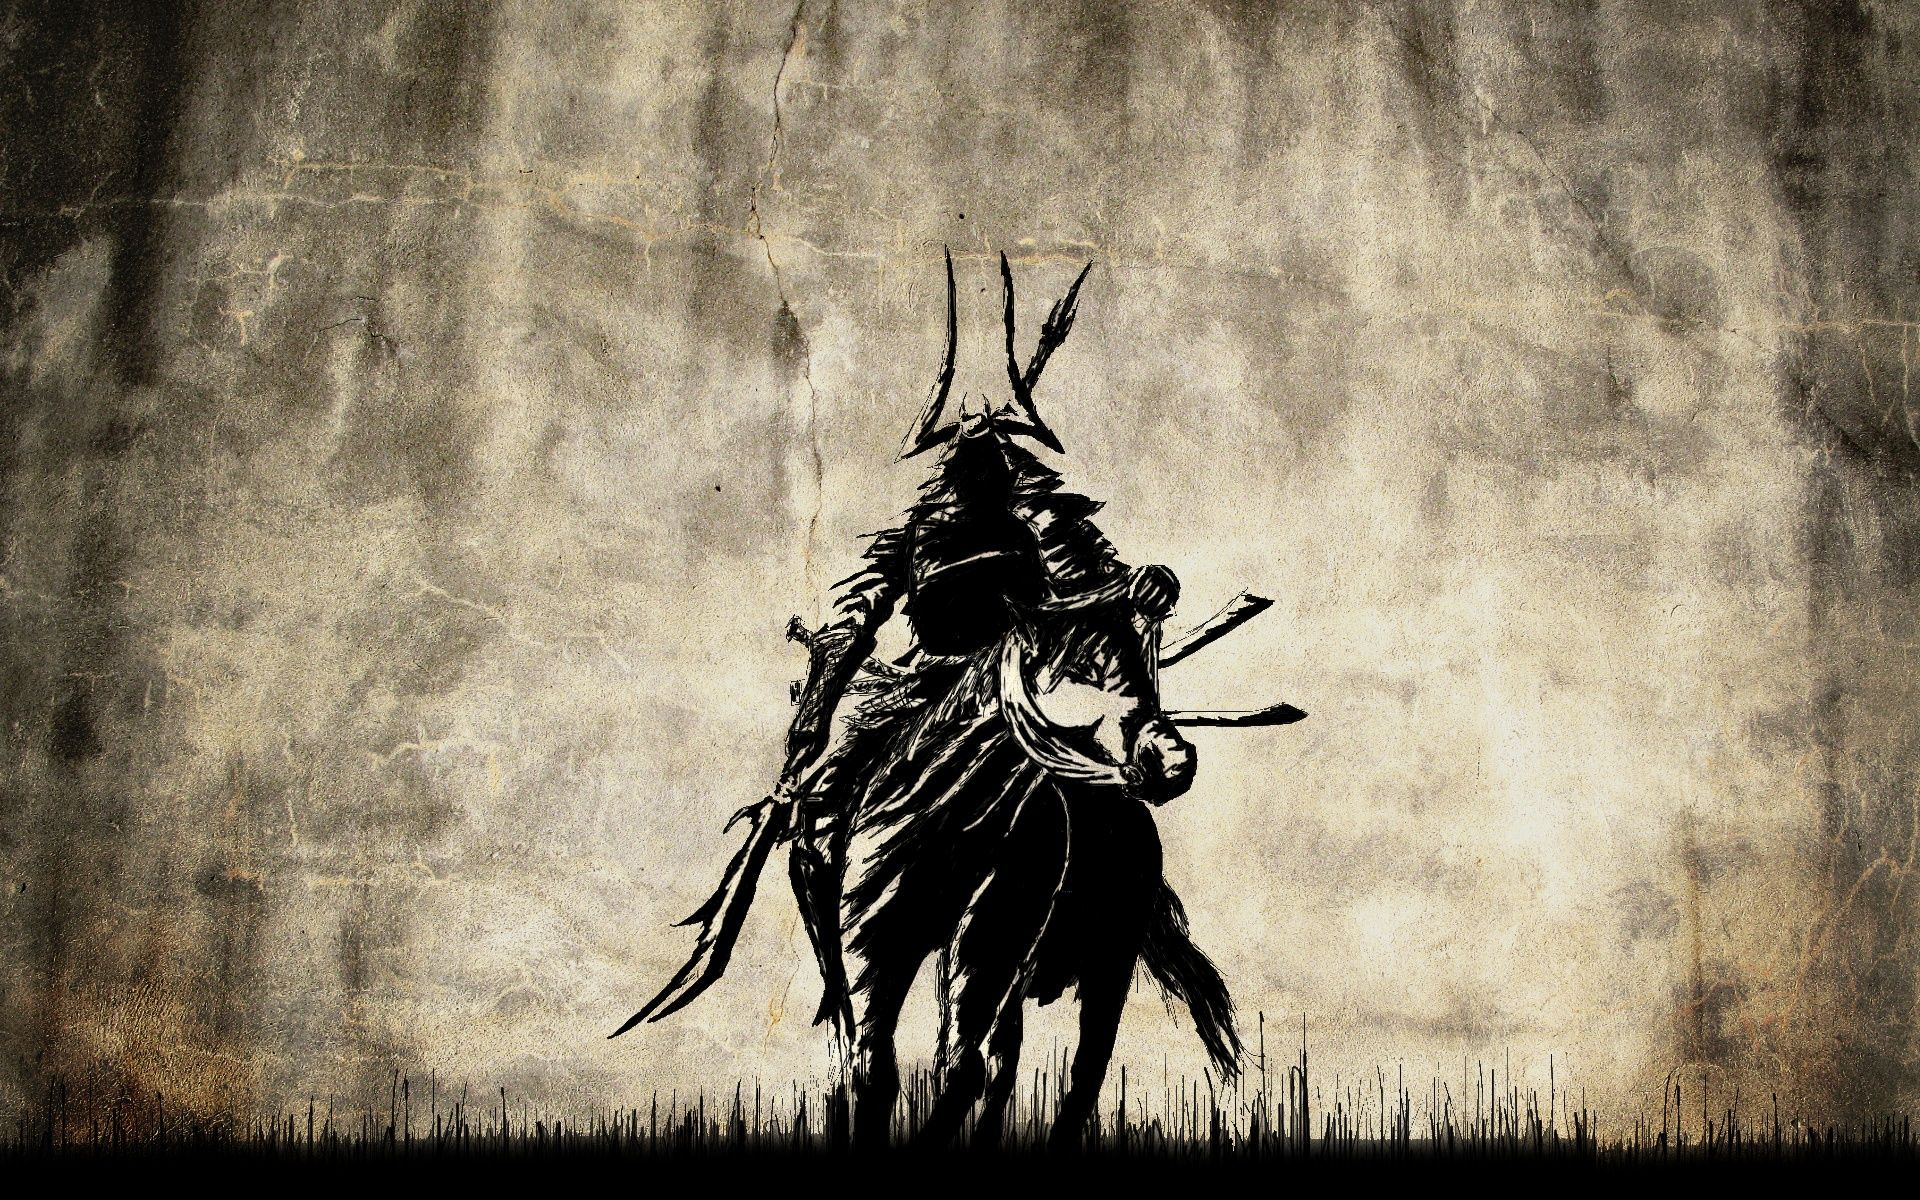 An illustration of a samurai on horseback - Samurai